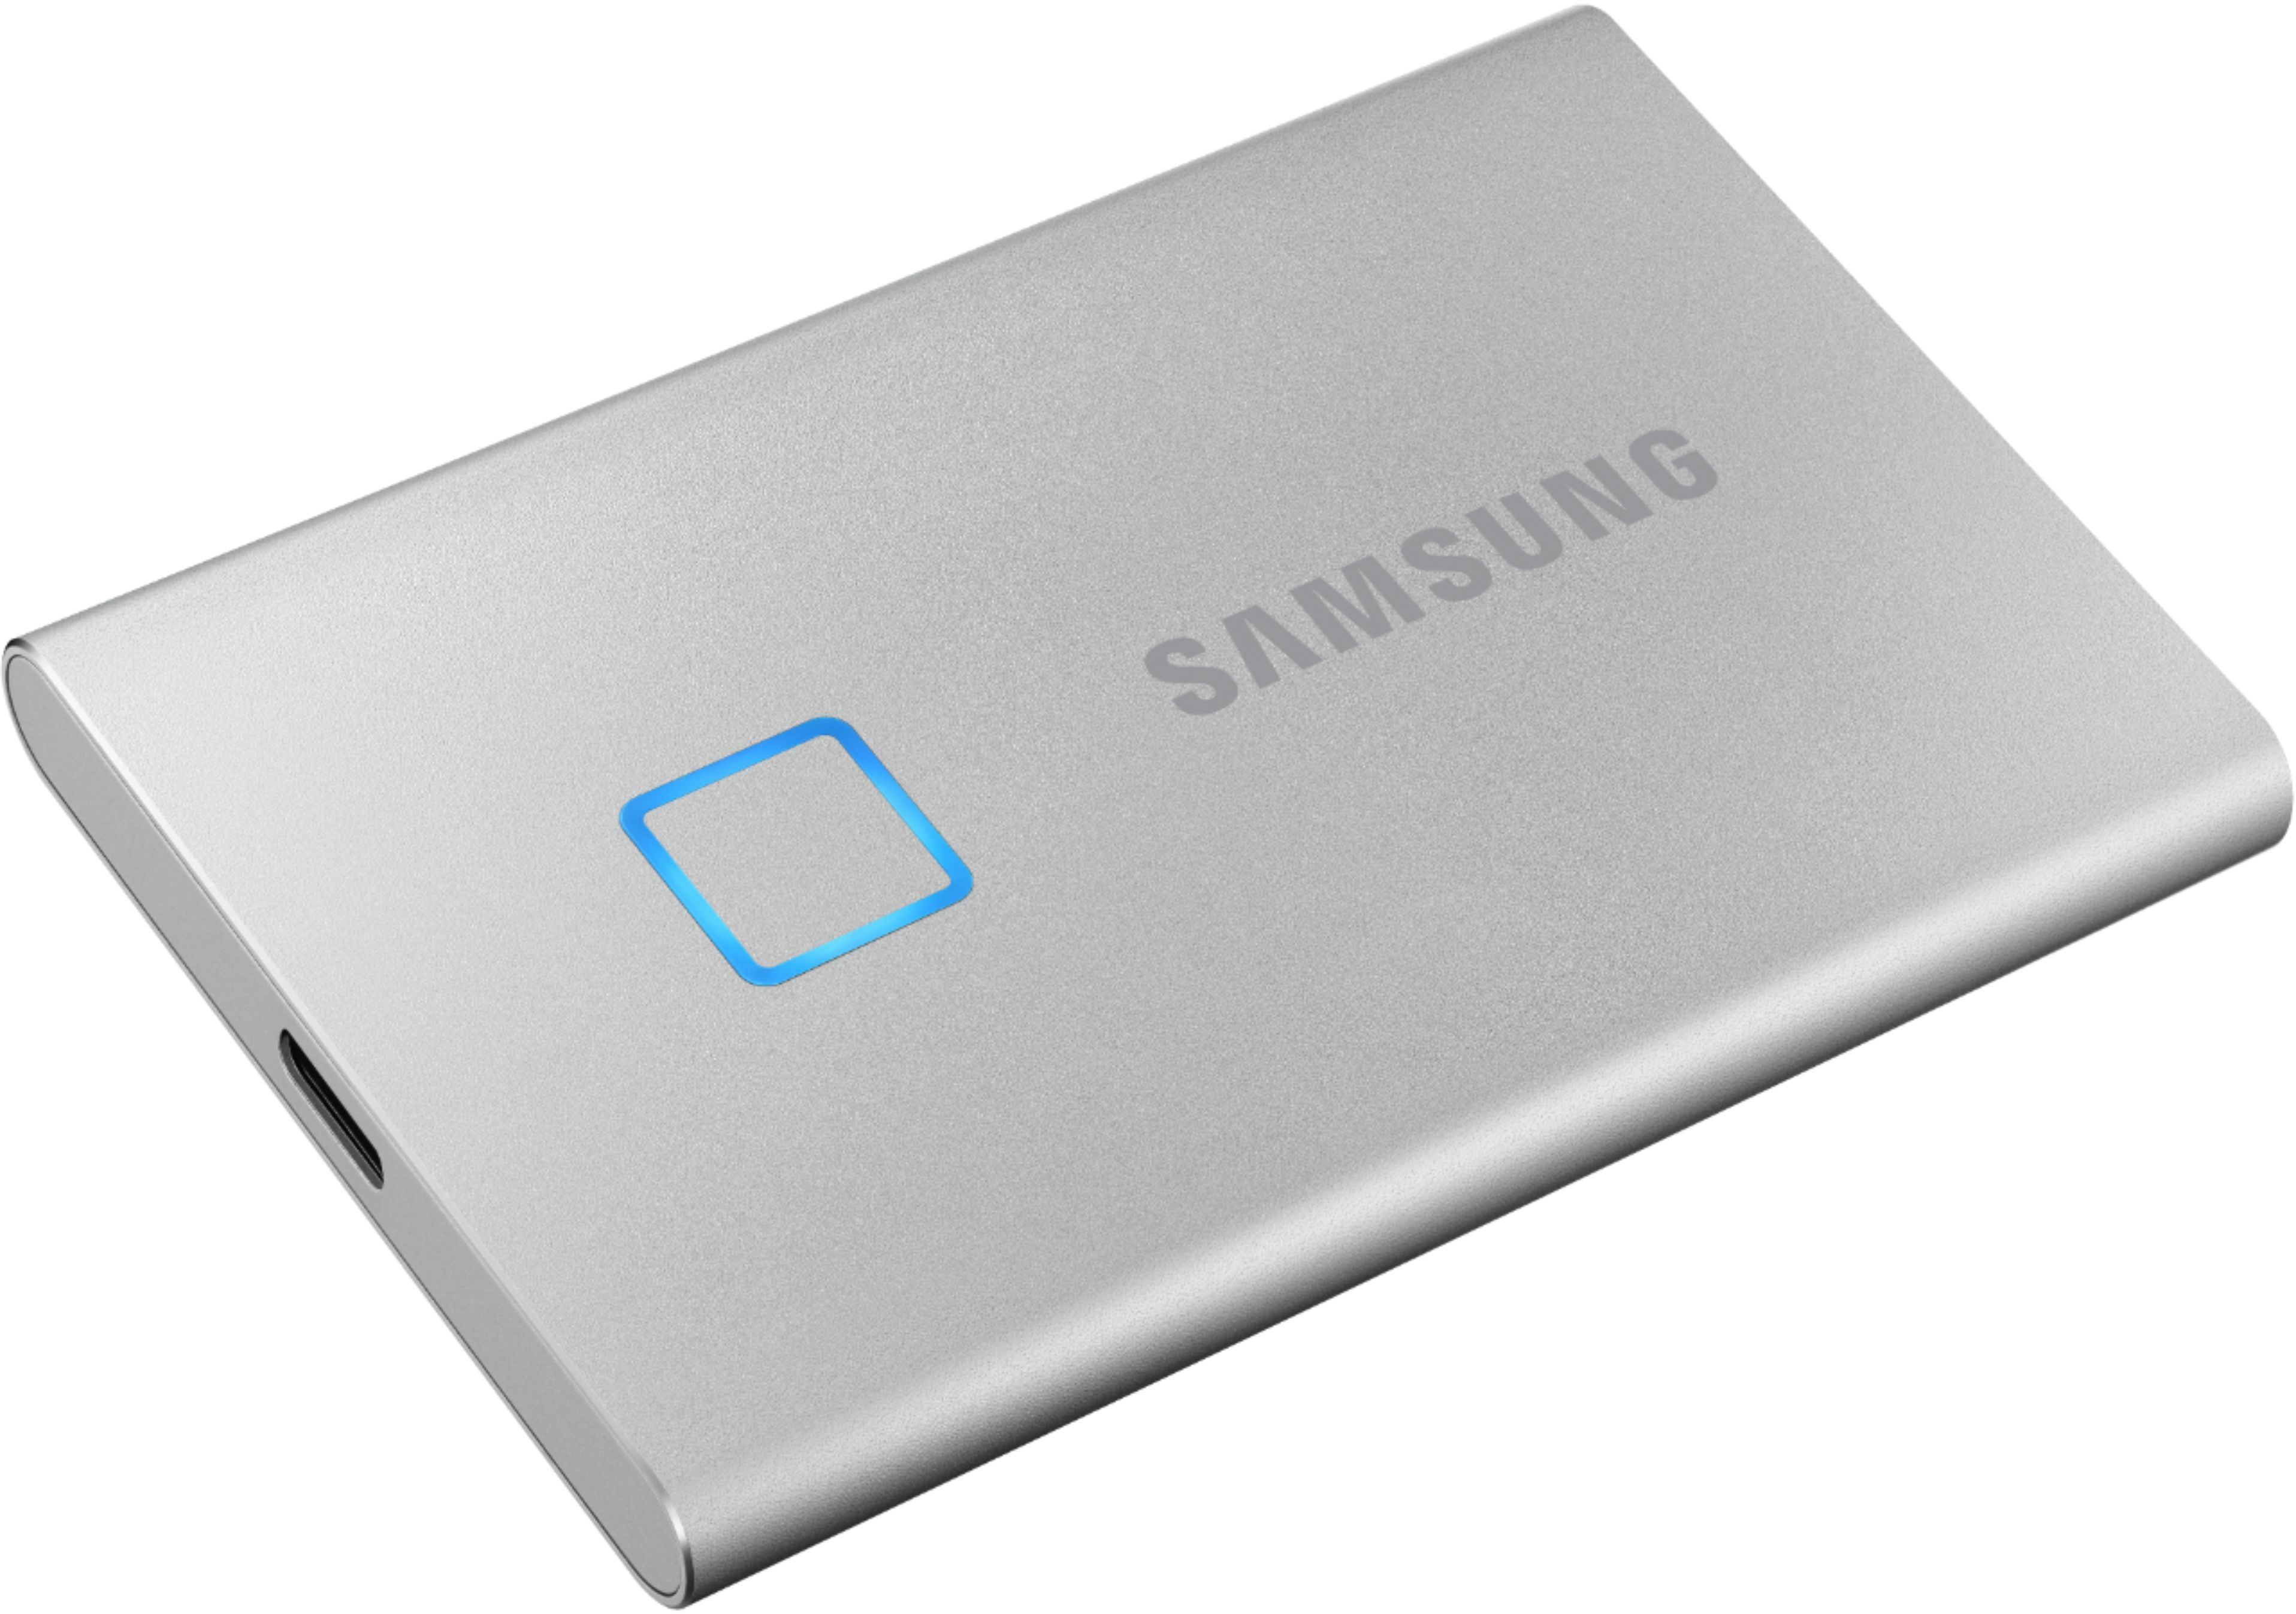 Samsung T7 Touch Portable SSD - 2.0 TB (Black) - MU-PC2T0K/WW 